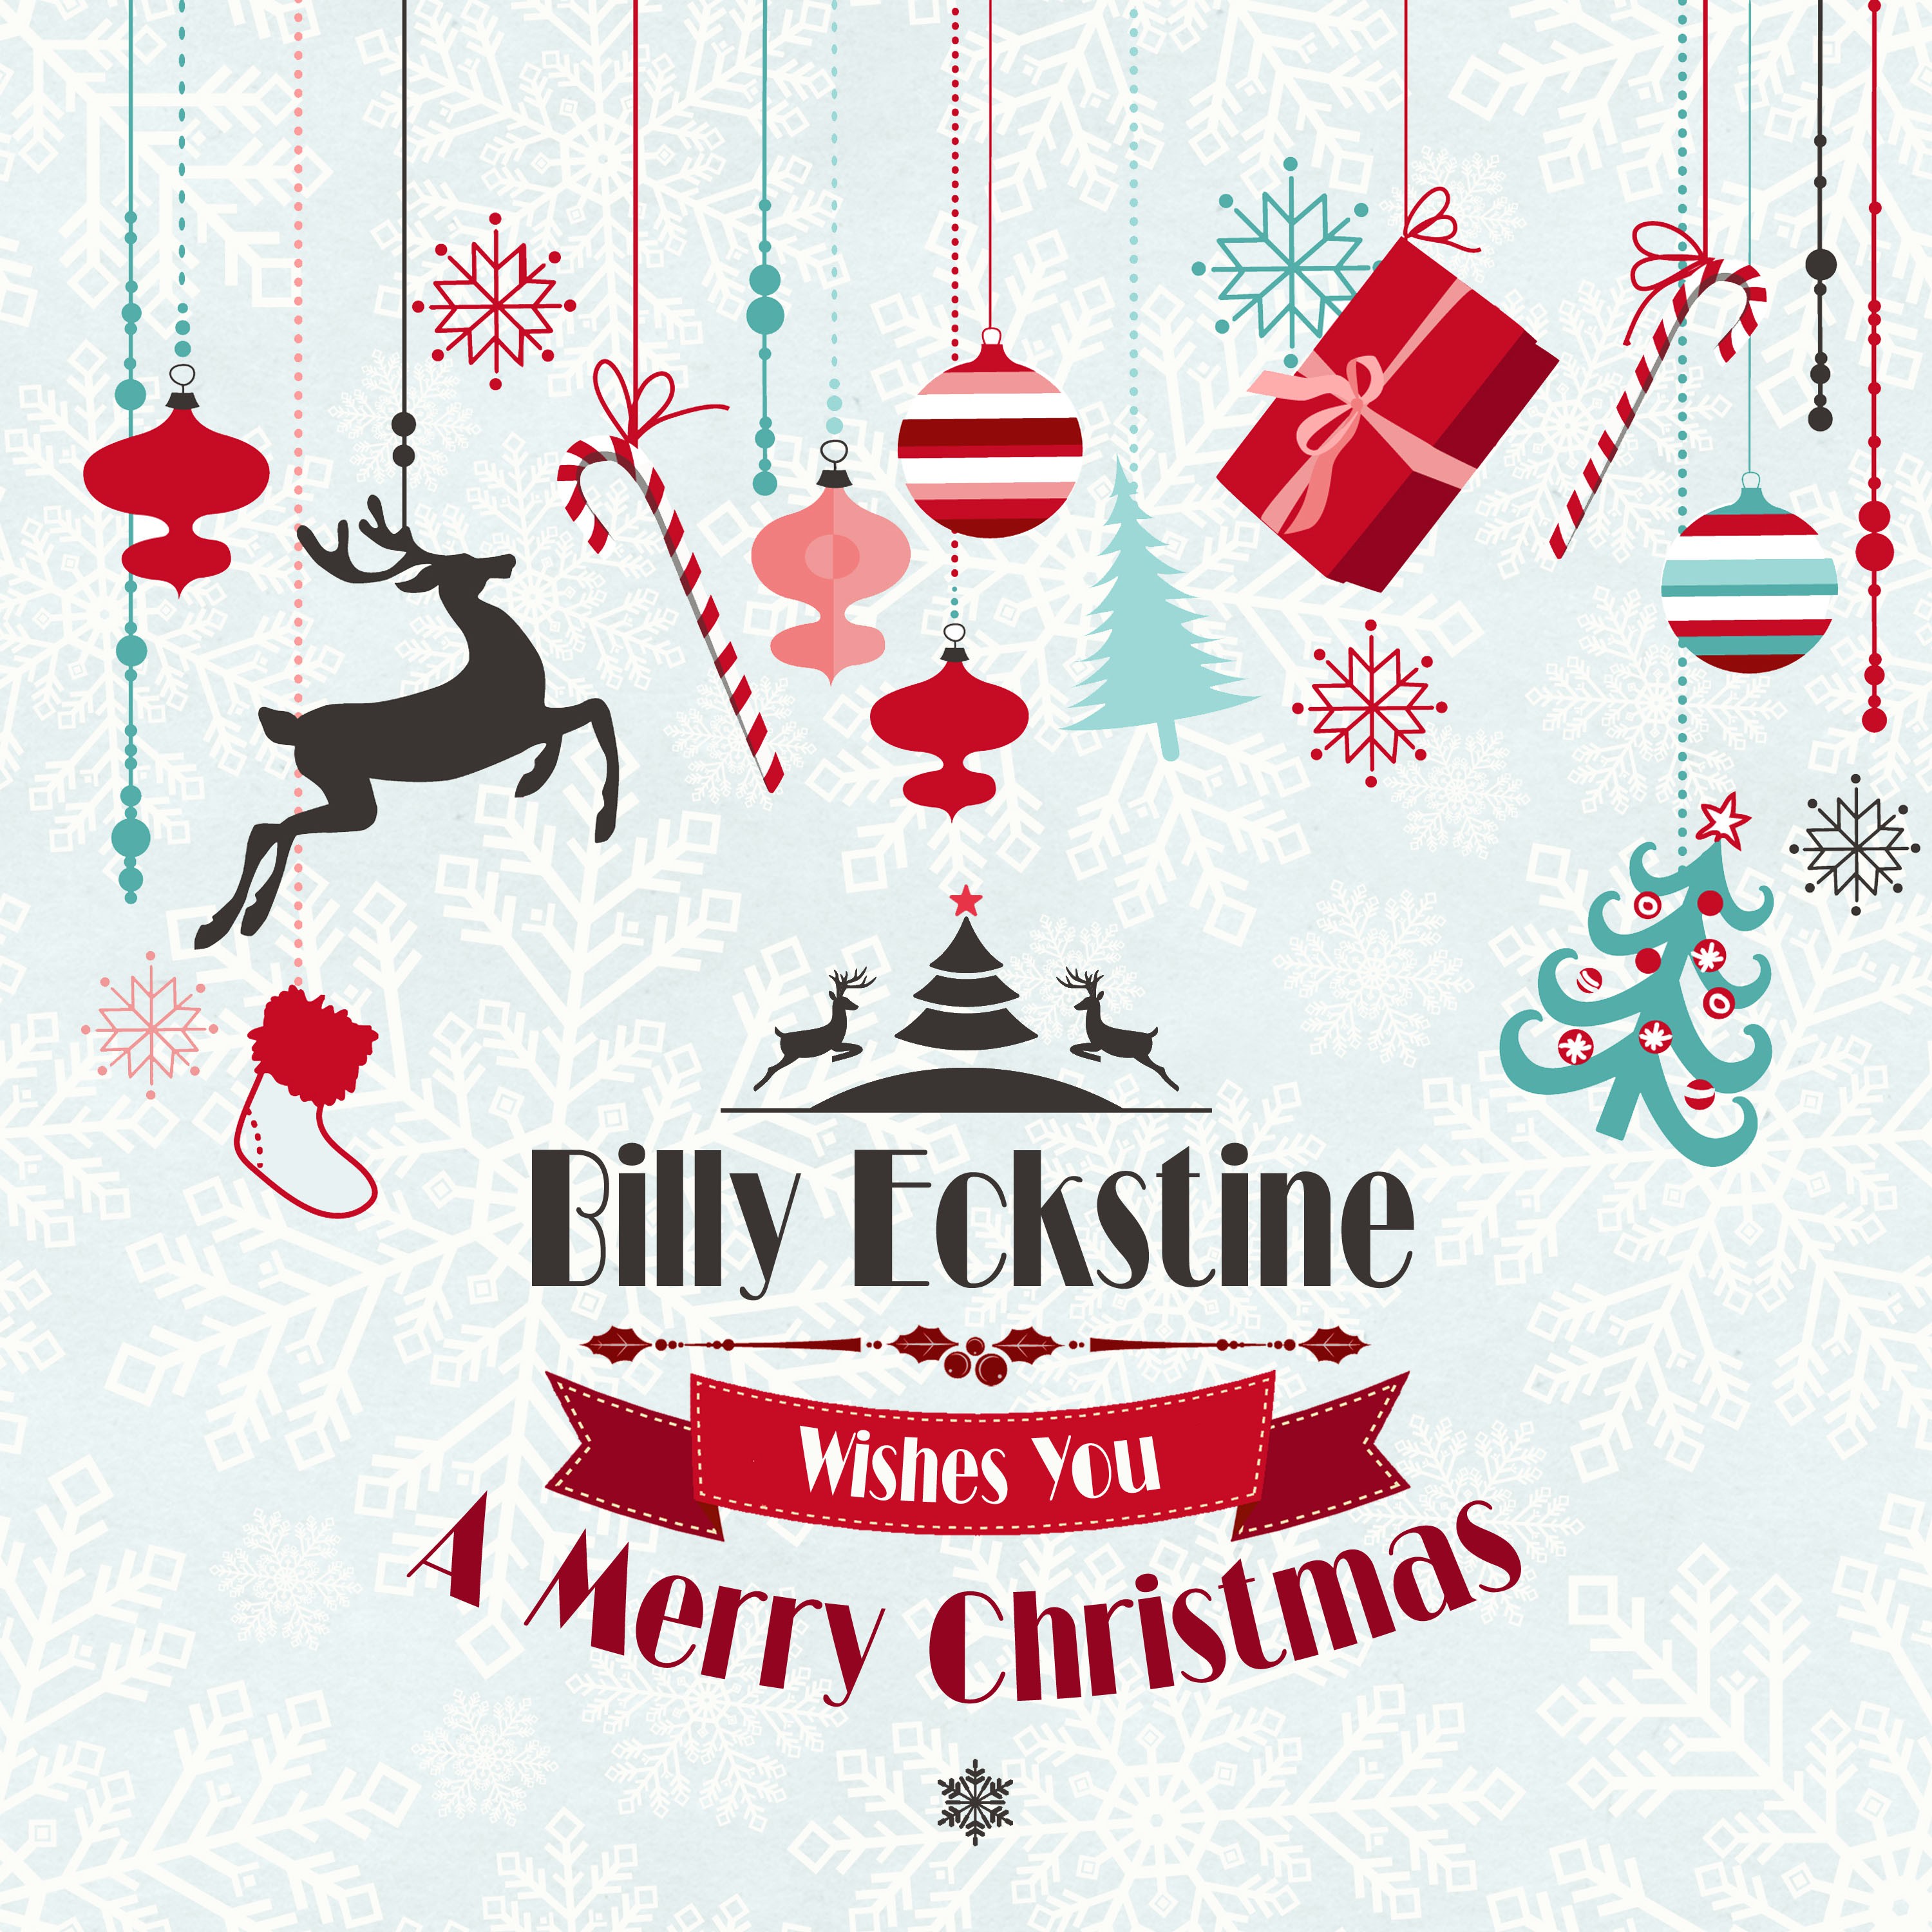 Billy Eckstine Wishes You a Merry Christmas